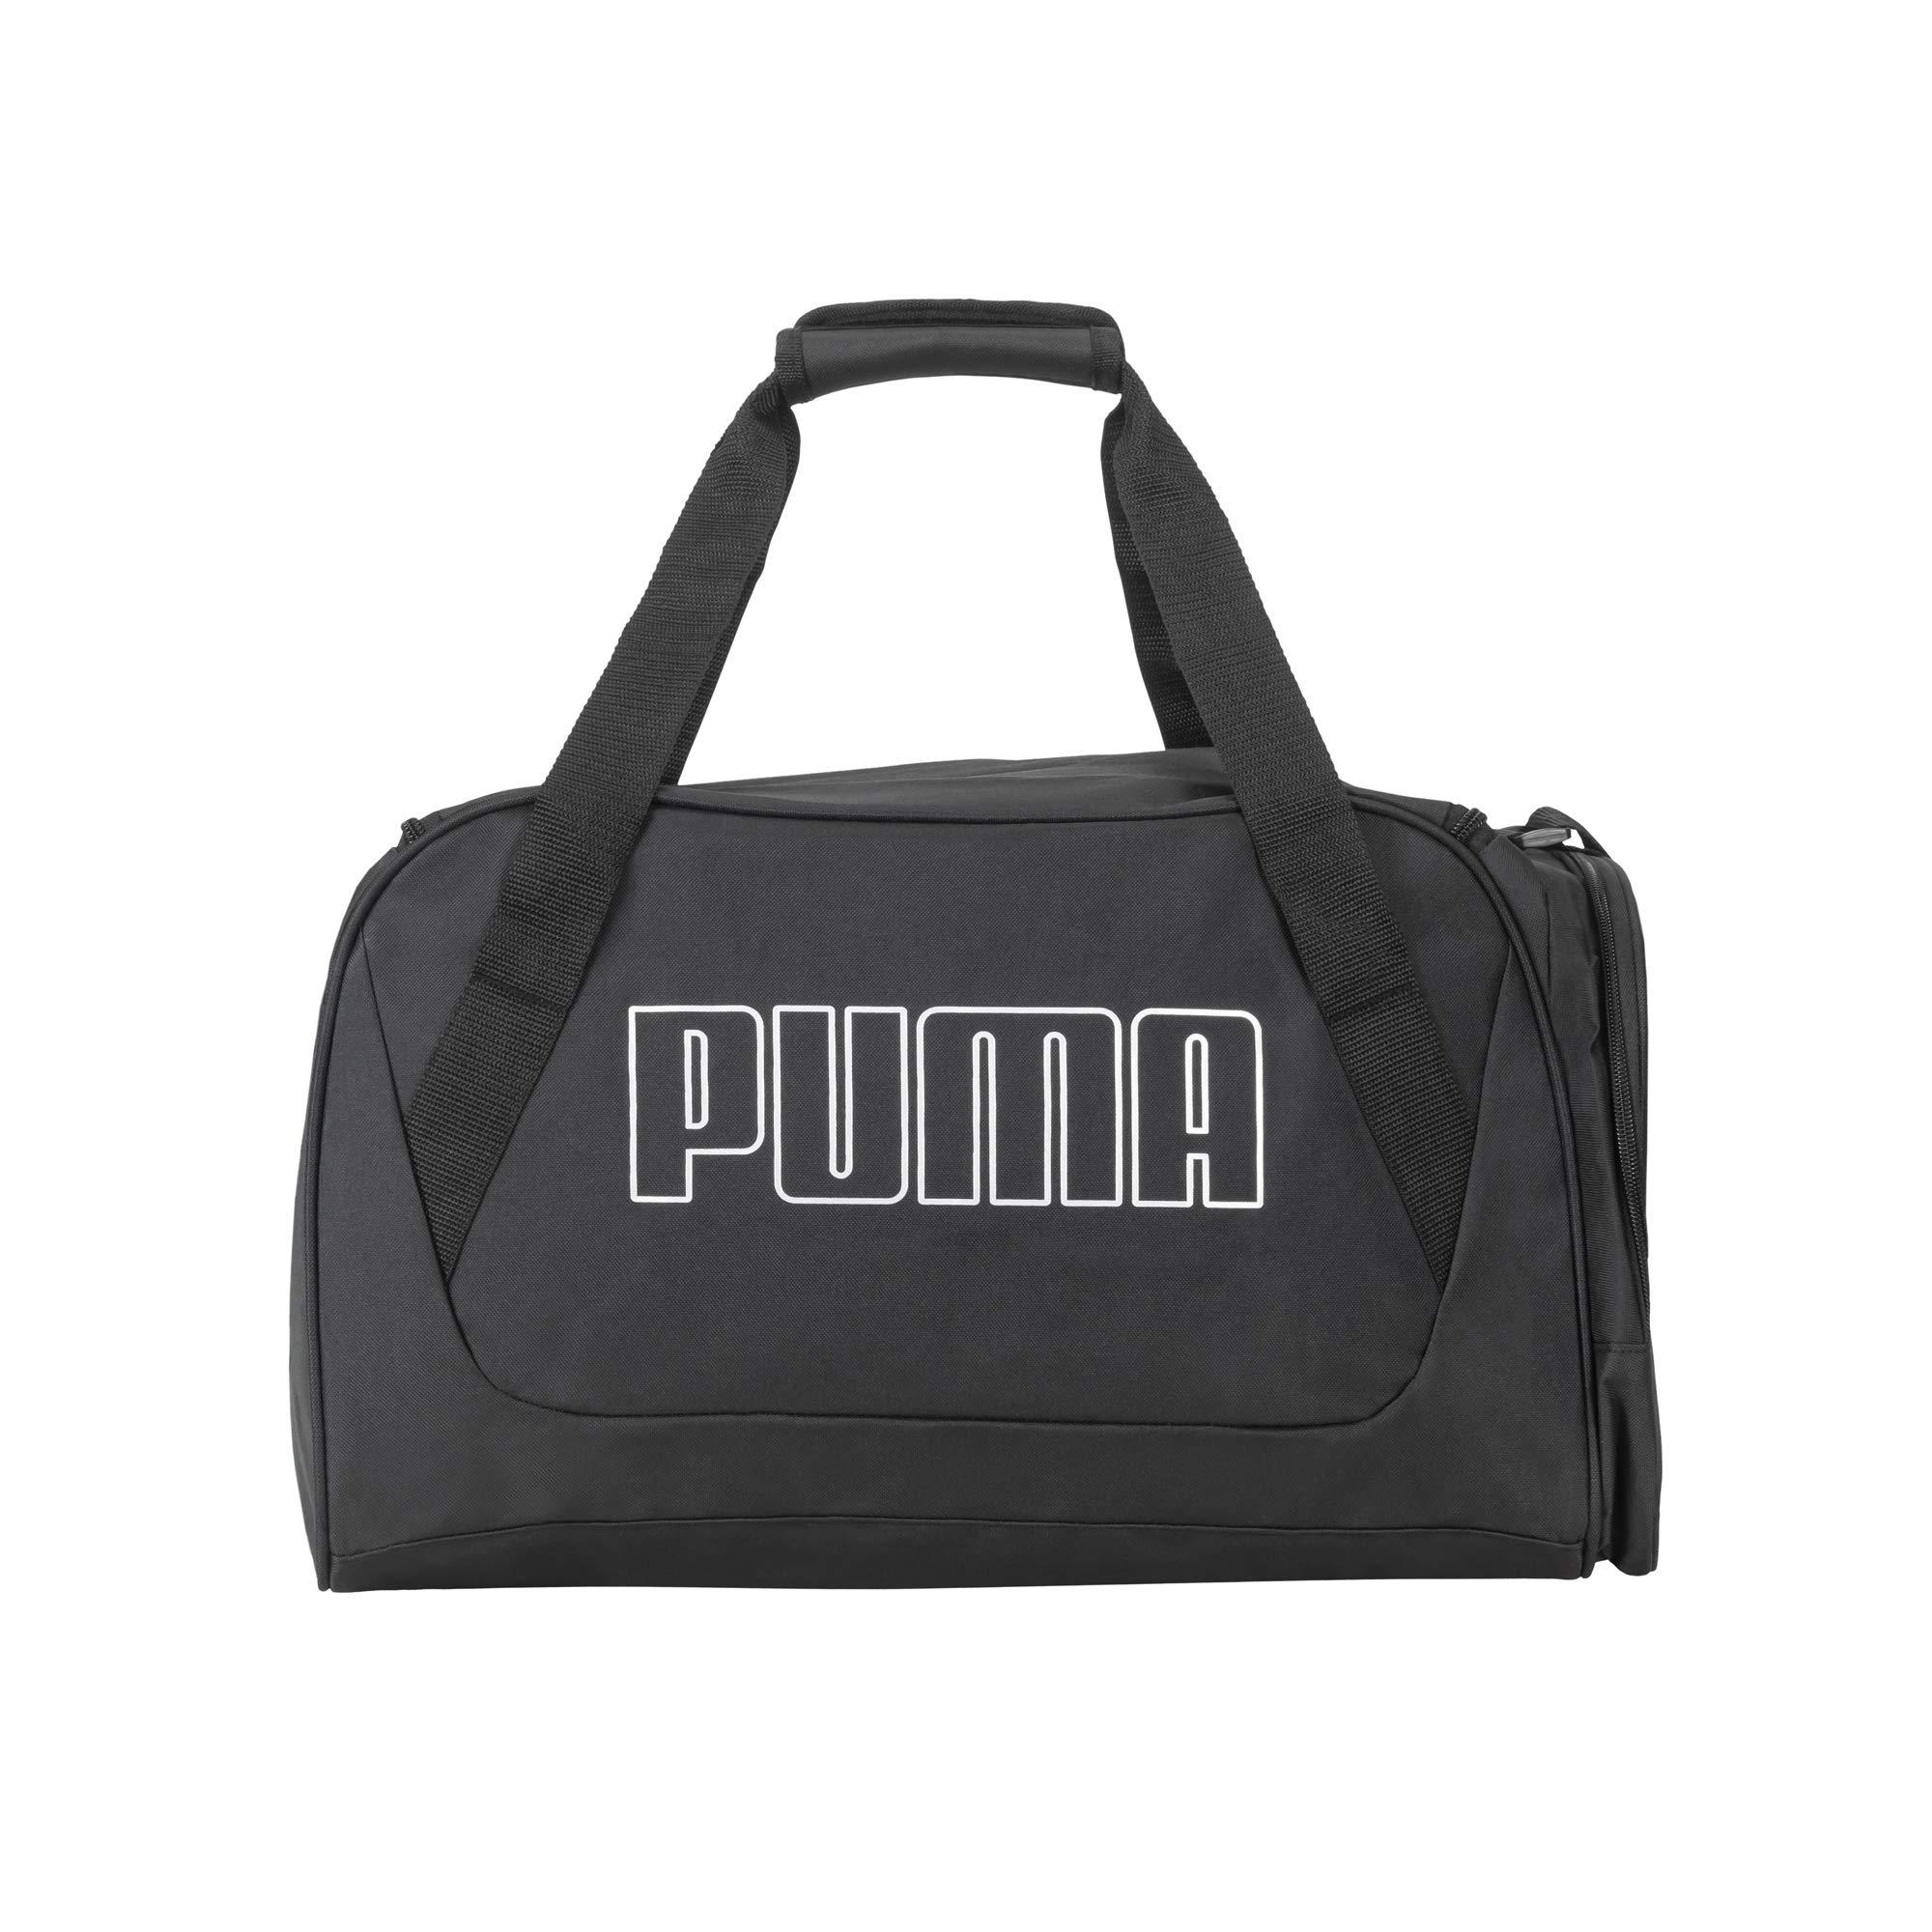 PUMA Evercat Form Factor Duffel Bag in Black Heather (Black) - Save 47% -  Lyst